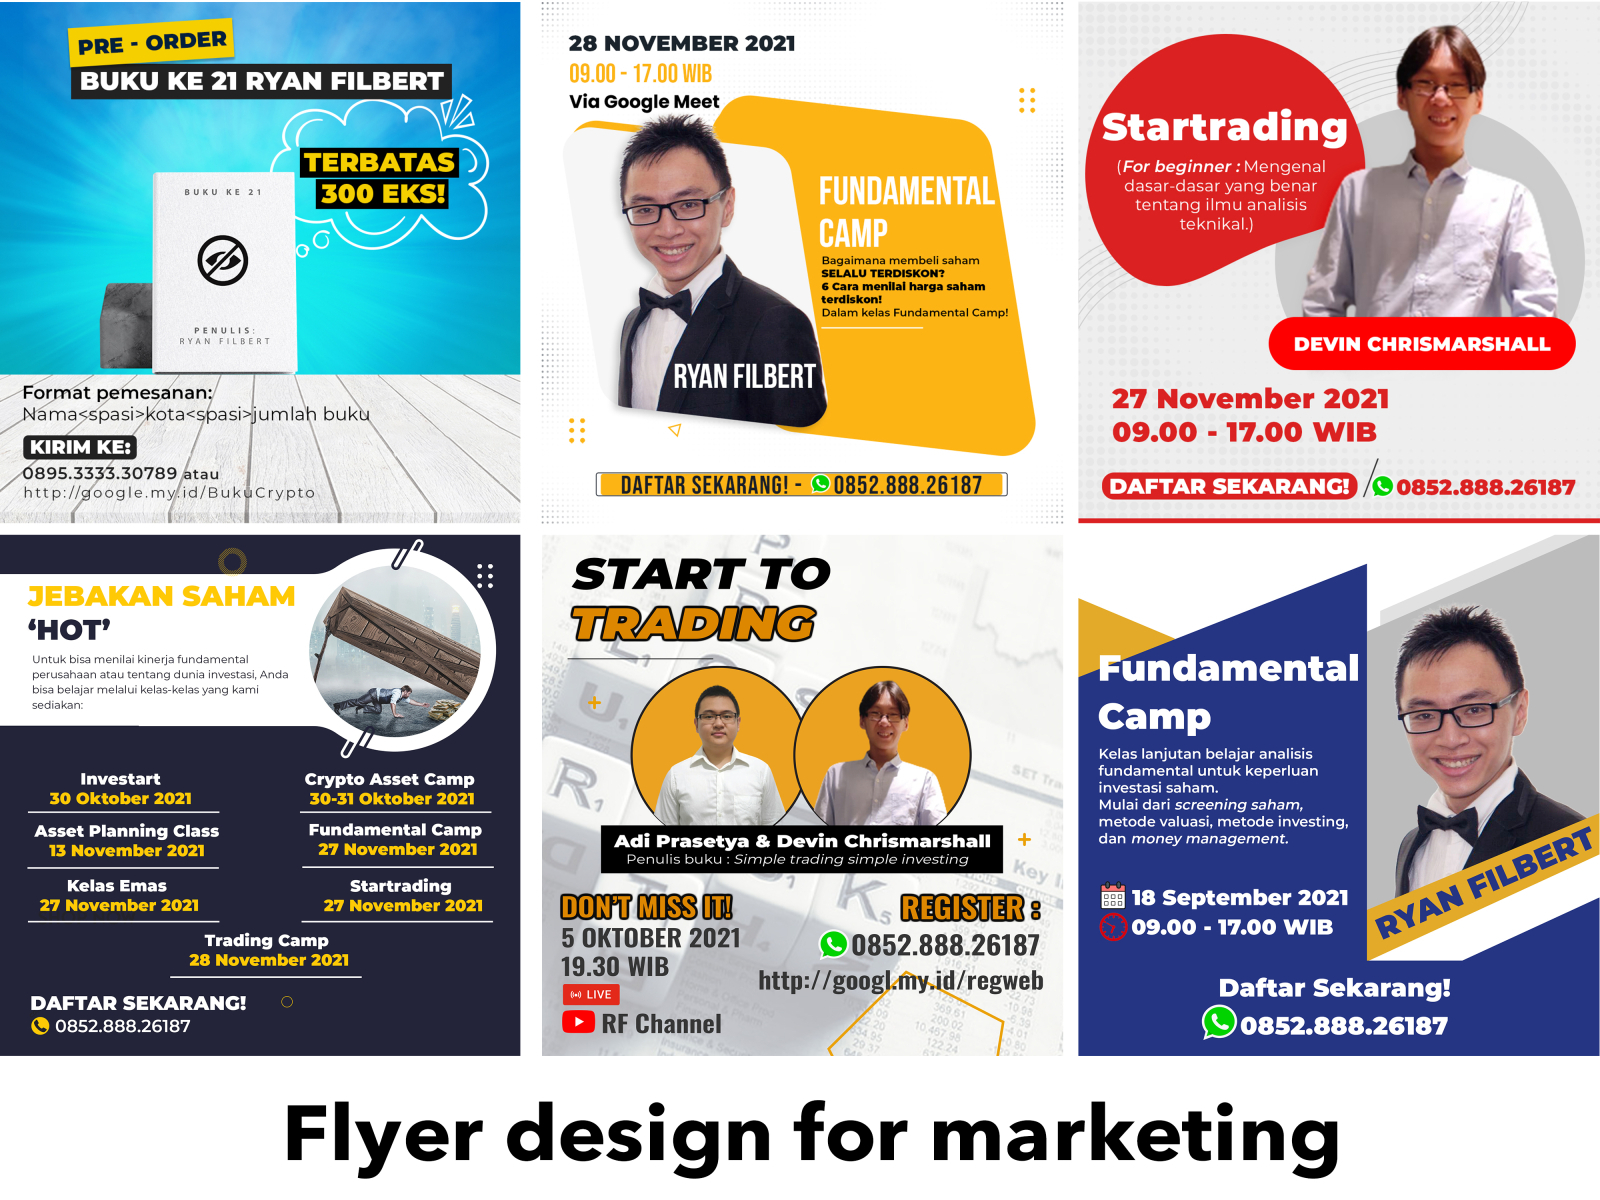 Flyer design for marketing by Desthalia on Dribbble